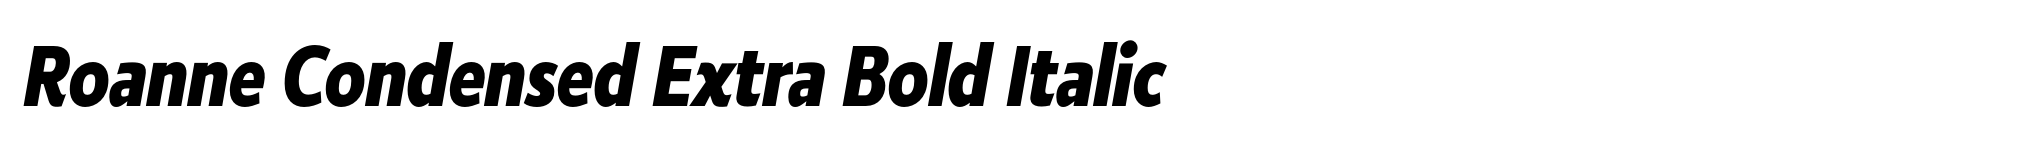 Roanne Condensed Extra Bold Italic image